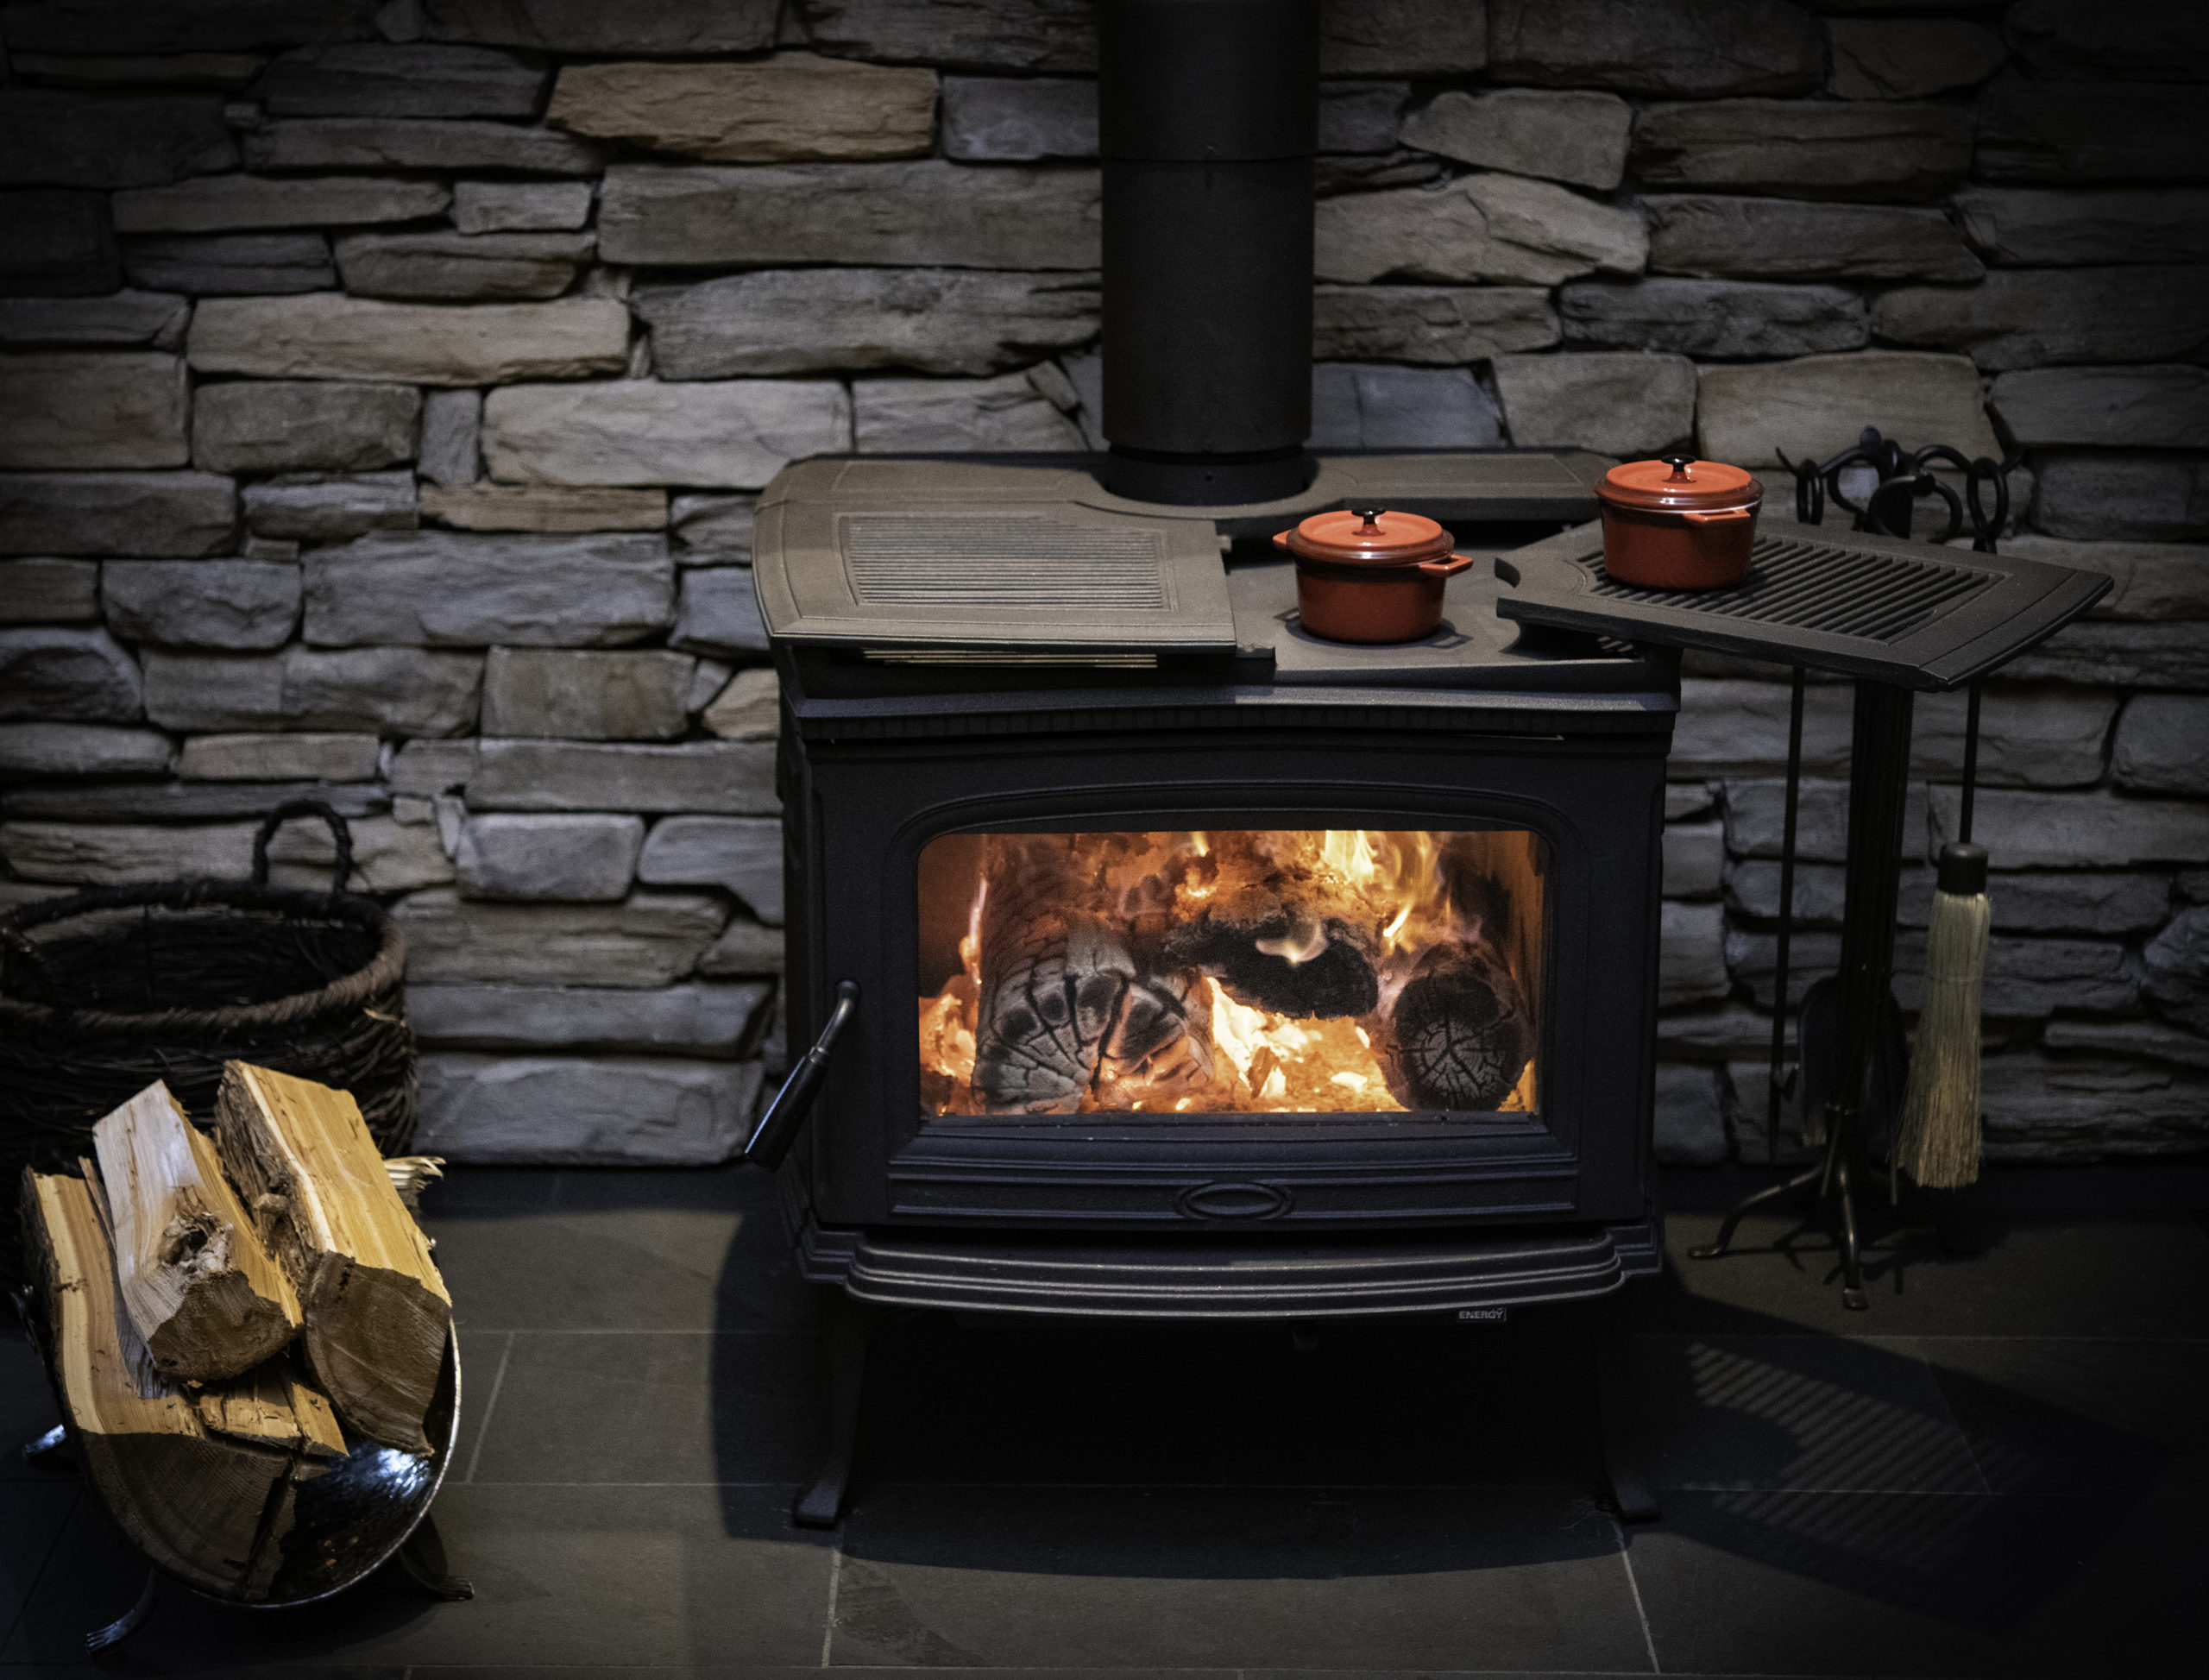 Alderlea T6 LE wood stove featuring Cast Iron over Steel technology